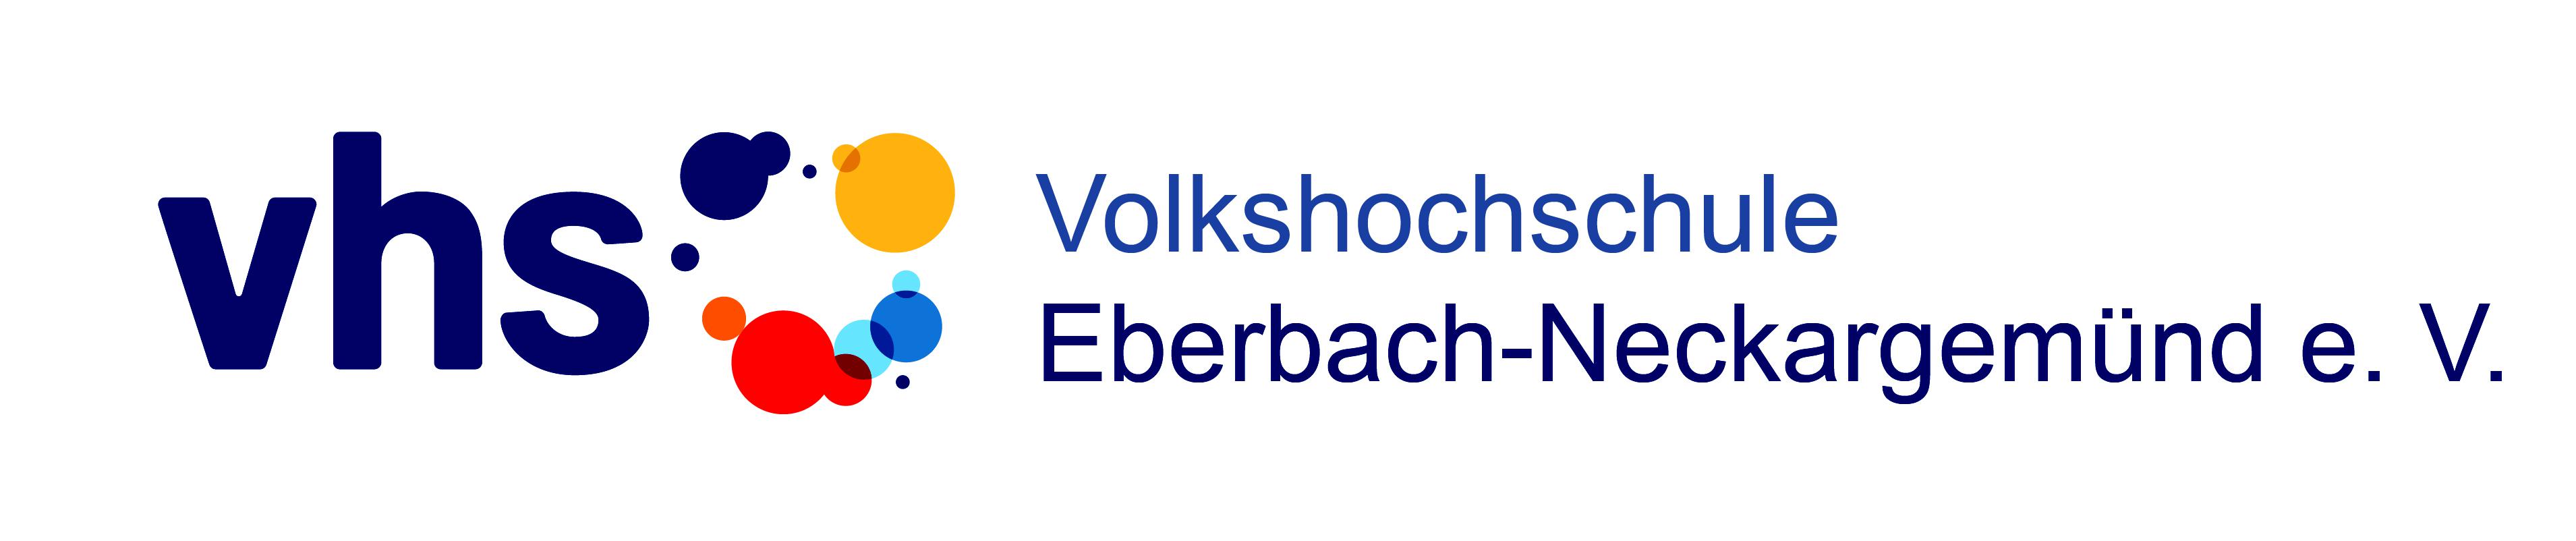 Banner VHS Eberbach-Neckargemünd